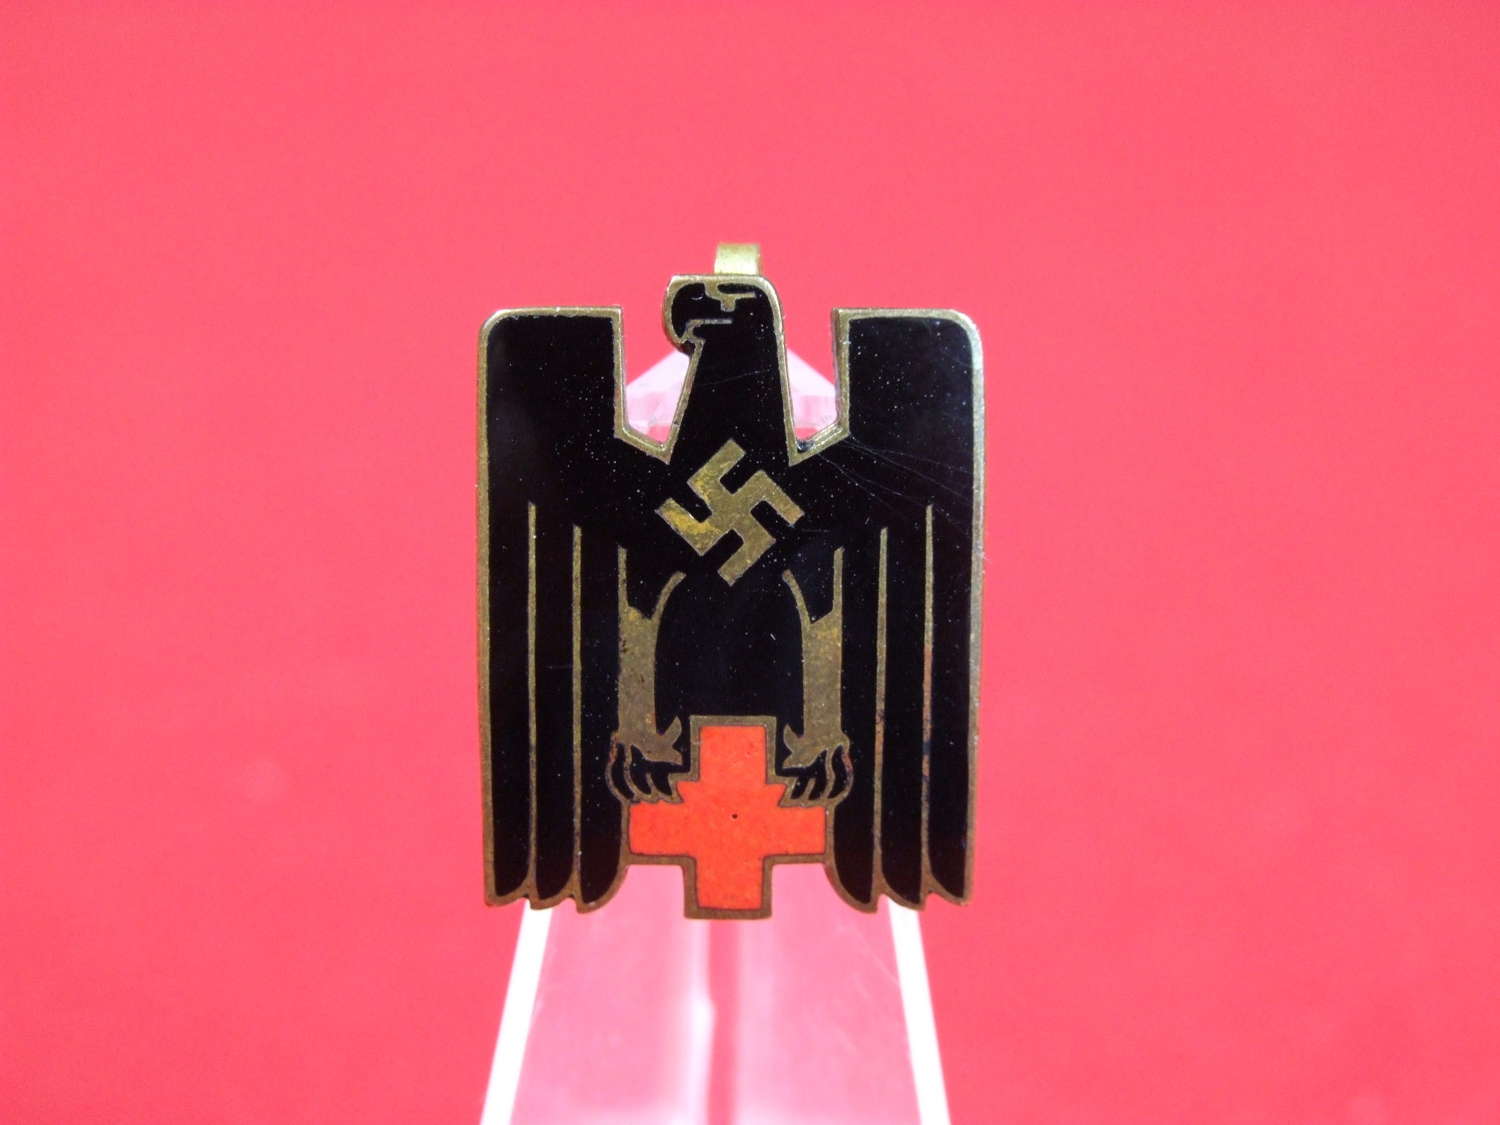 Deutsches Rotes Kreuz (German Red Cross) Visor Cap Insignia